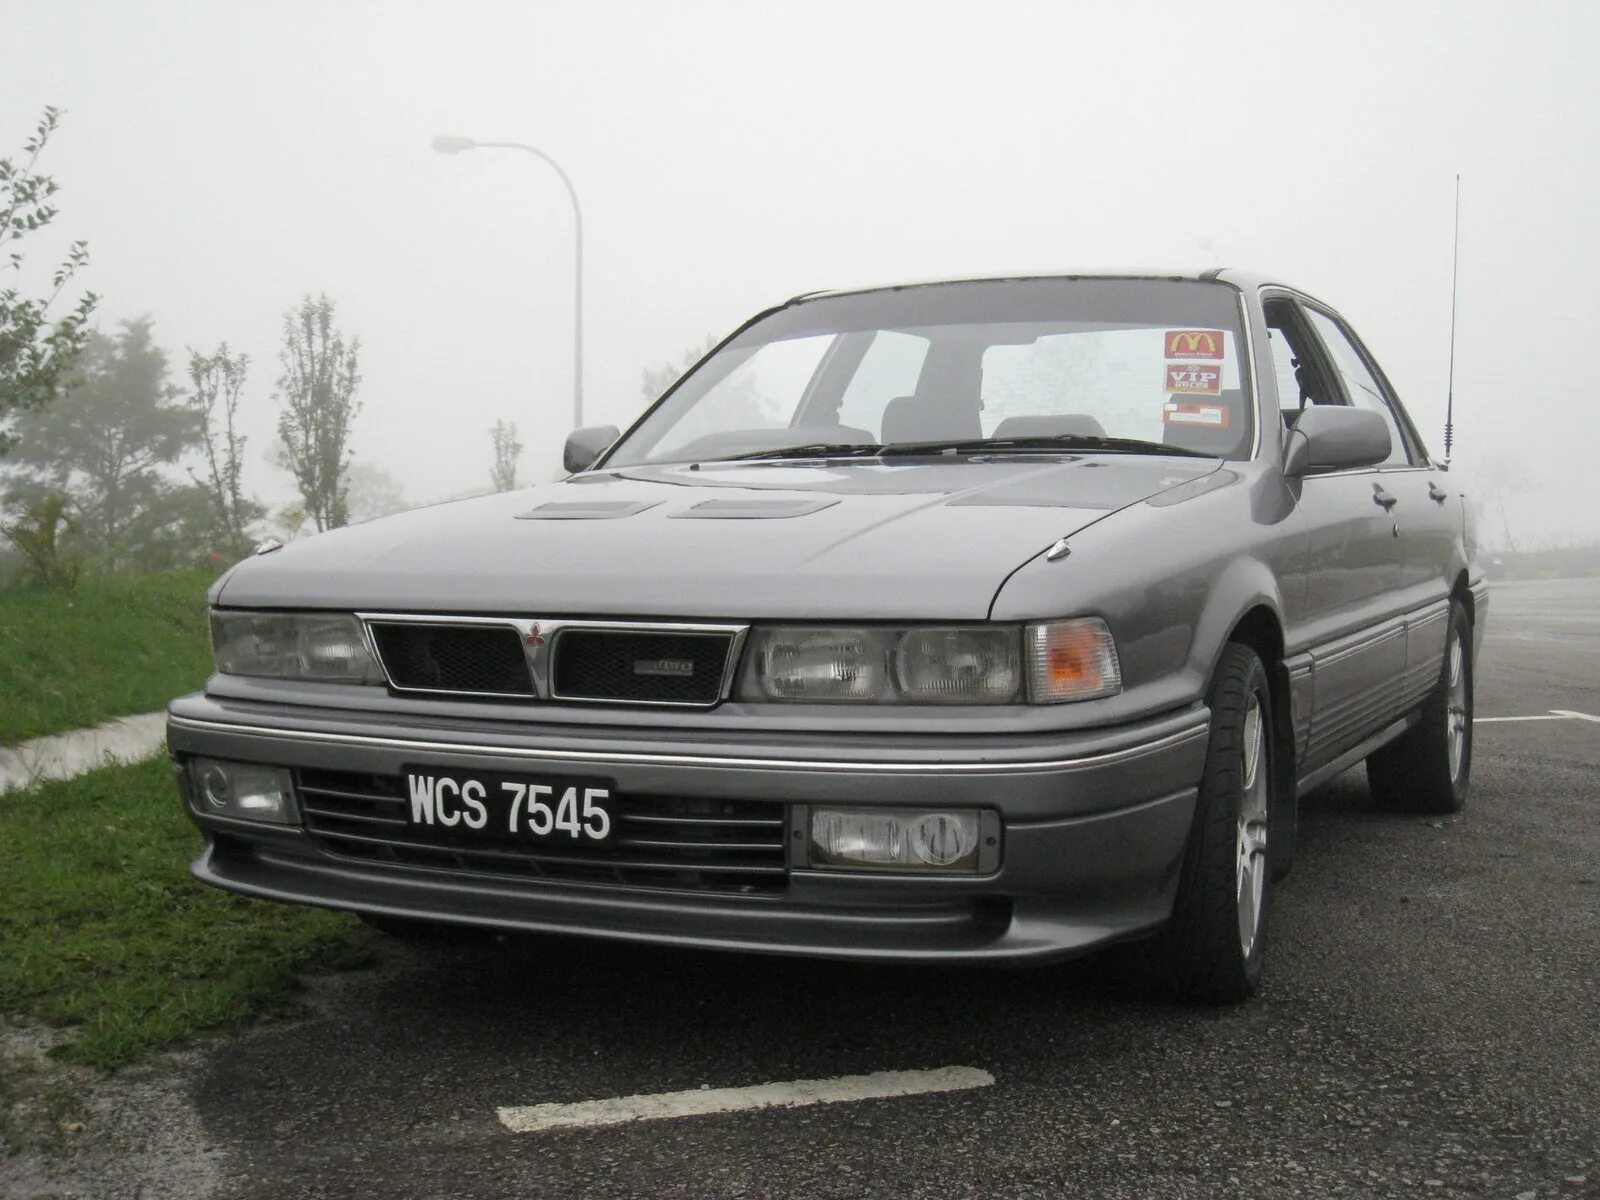 Mitsubishi 1992. Митсубиси Галант 1992. Мицубиси Галант 1989. Mitsubishi Galant 1992. Мицубиси Галант 6 1988-1992.